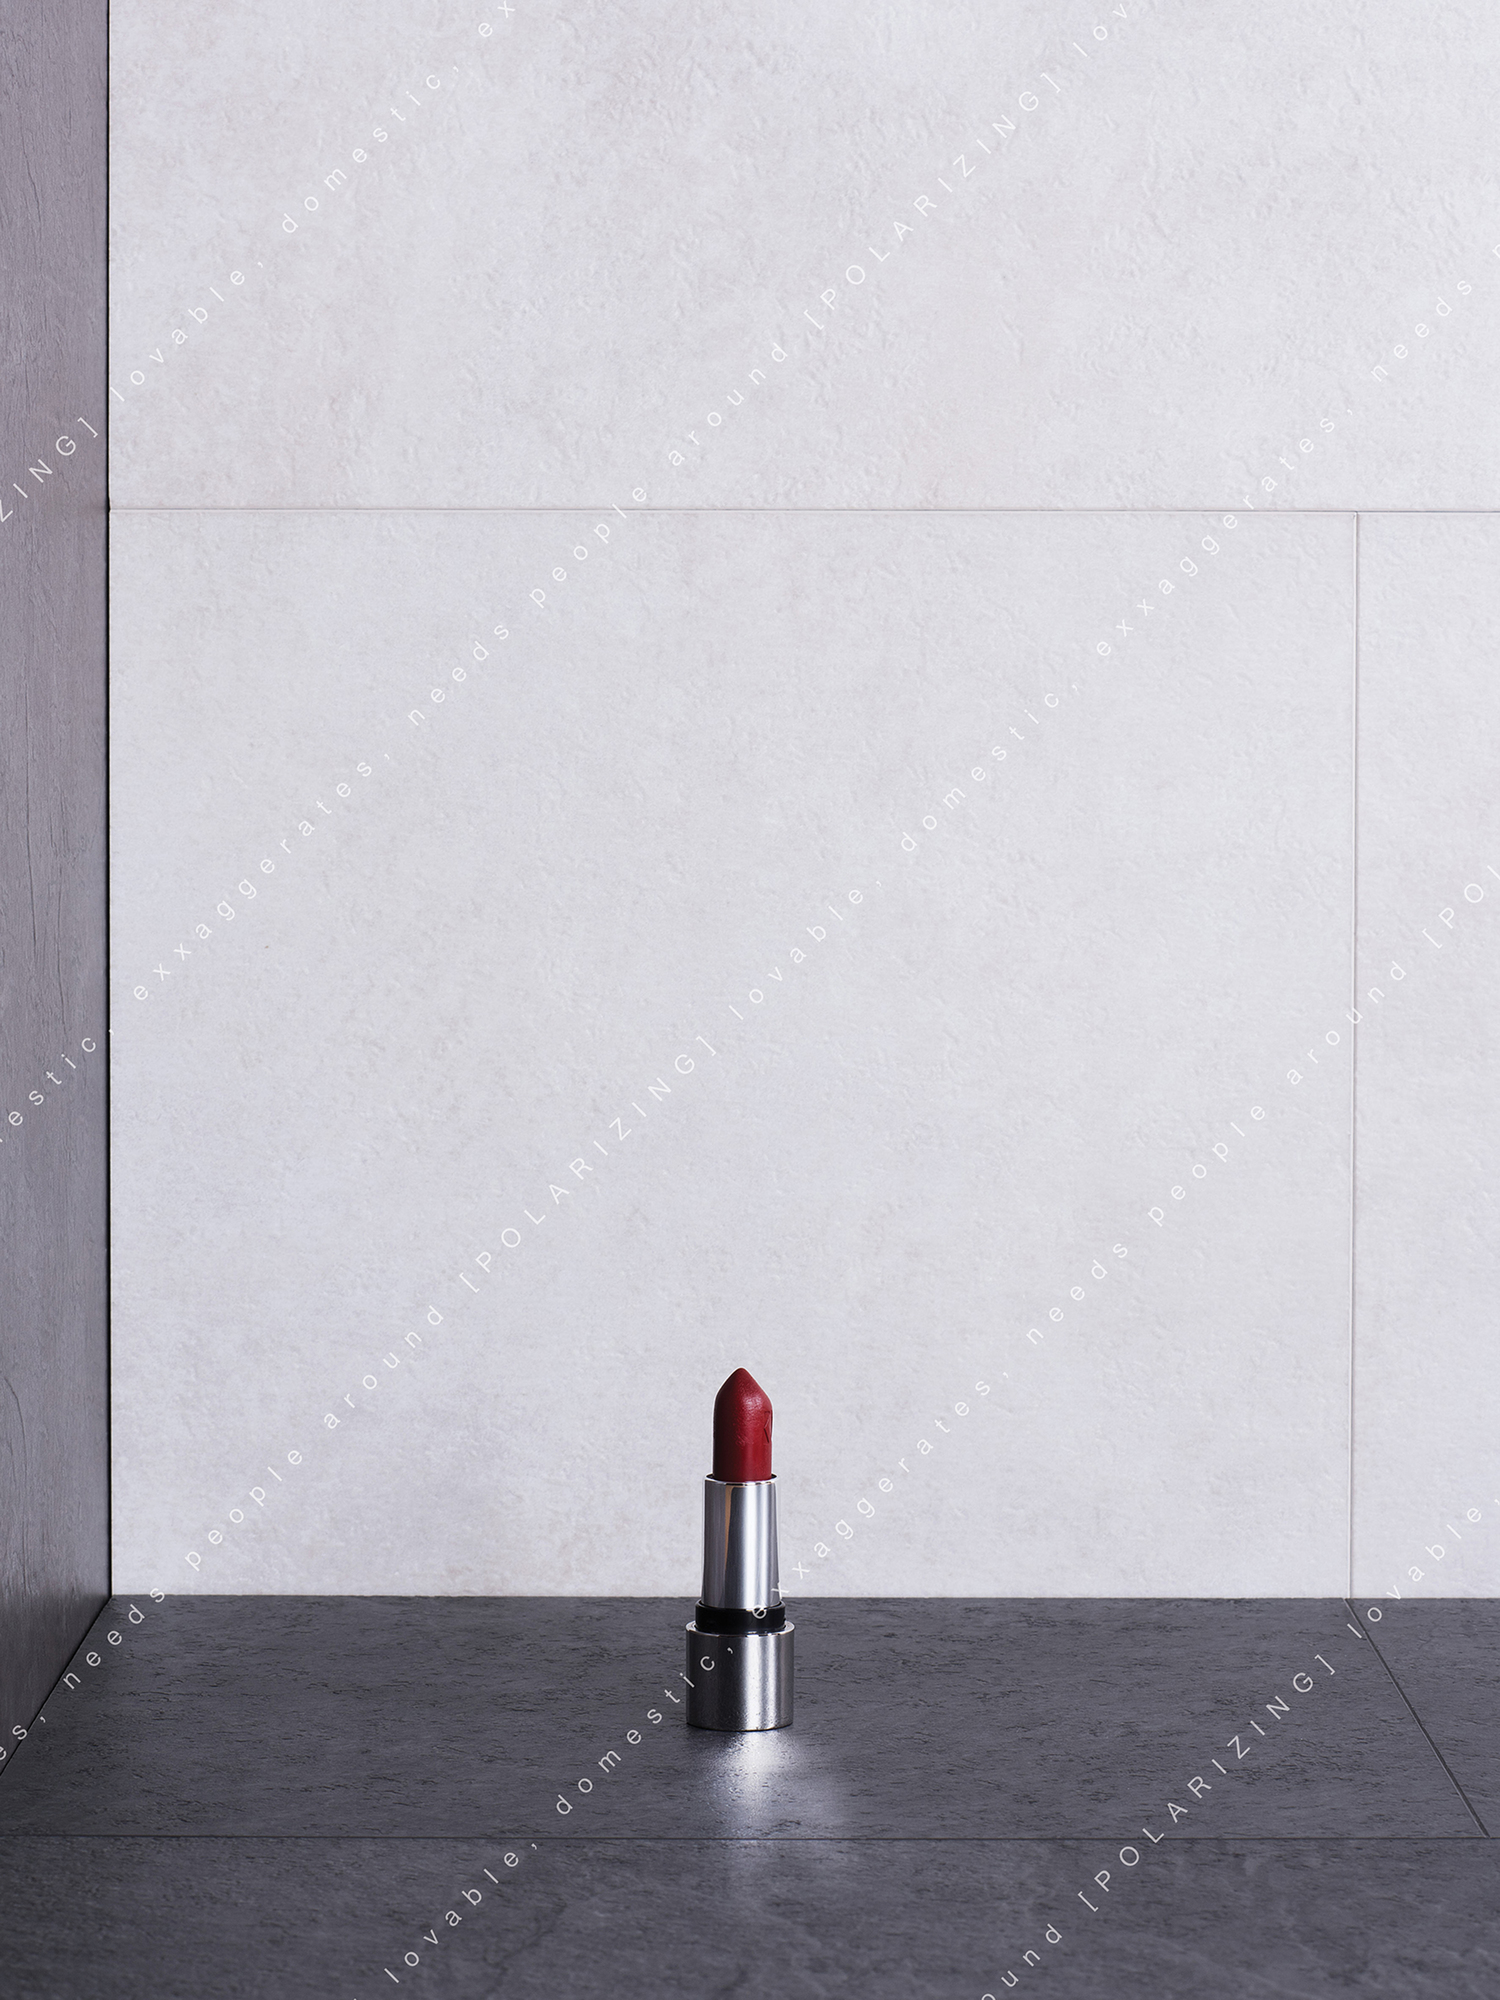 07 dostalkova lipstick shape personality